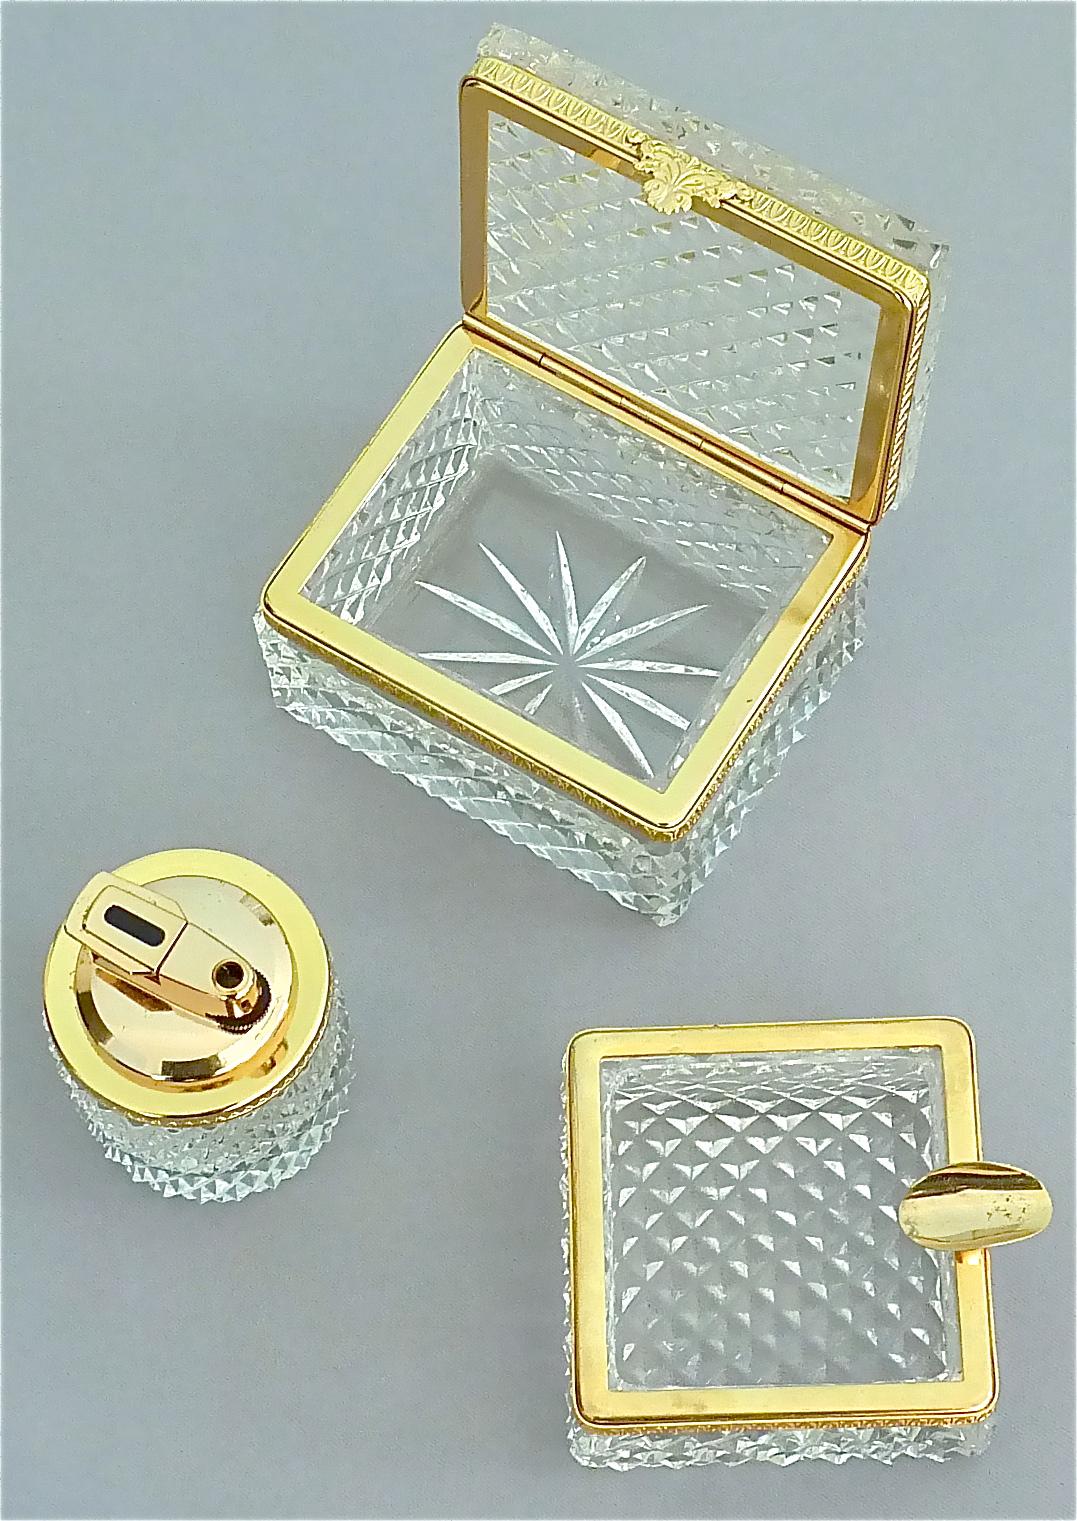 Hollywood Regency Rare 1950s Baccarat Crystal Glass Smoking Set Gilt Brass Ashtray Box Lighter